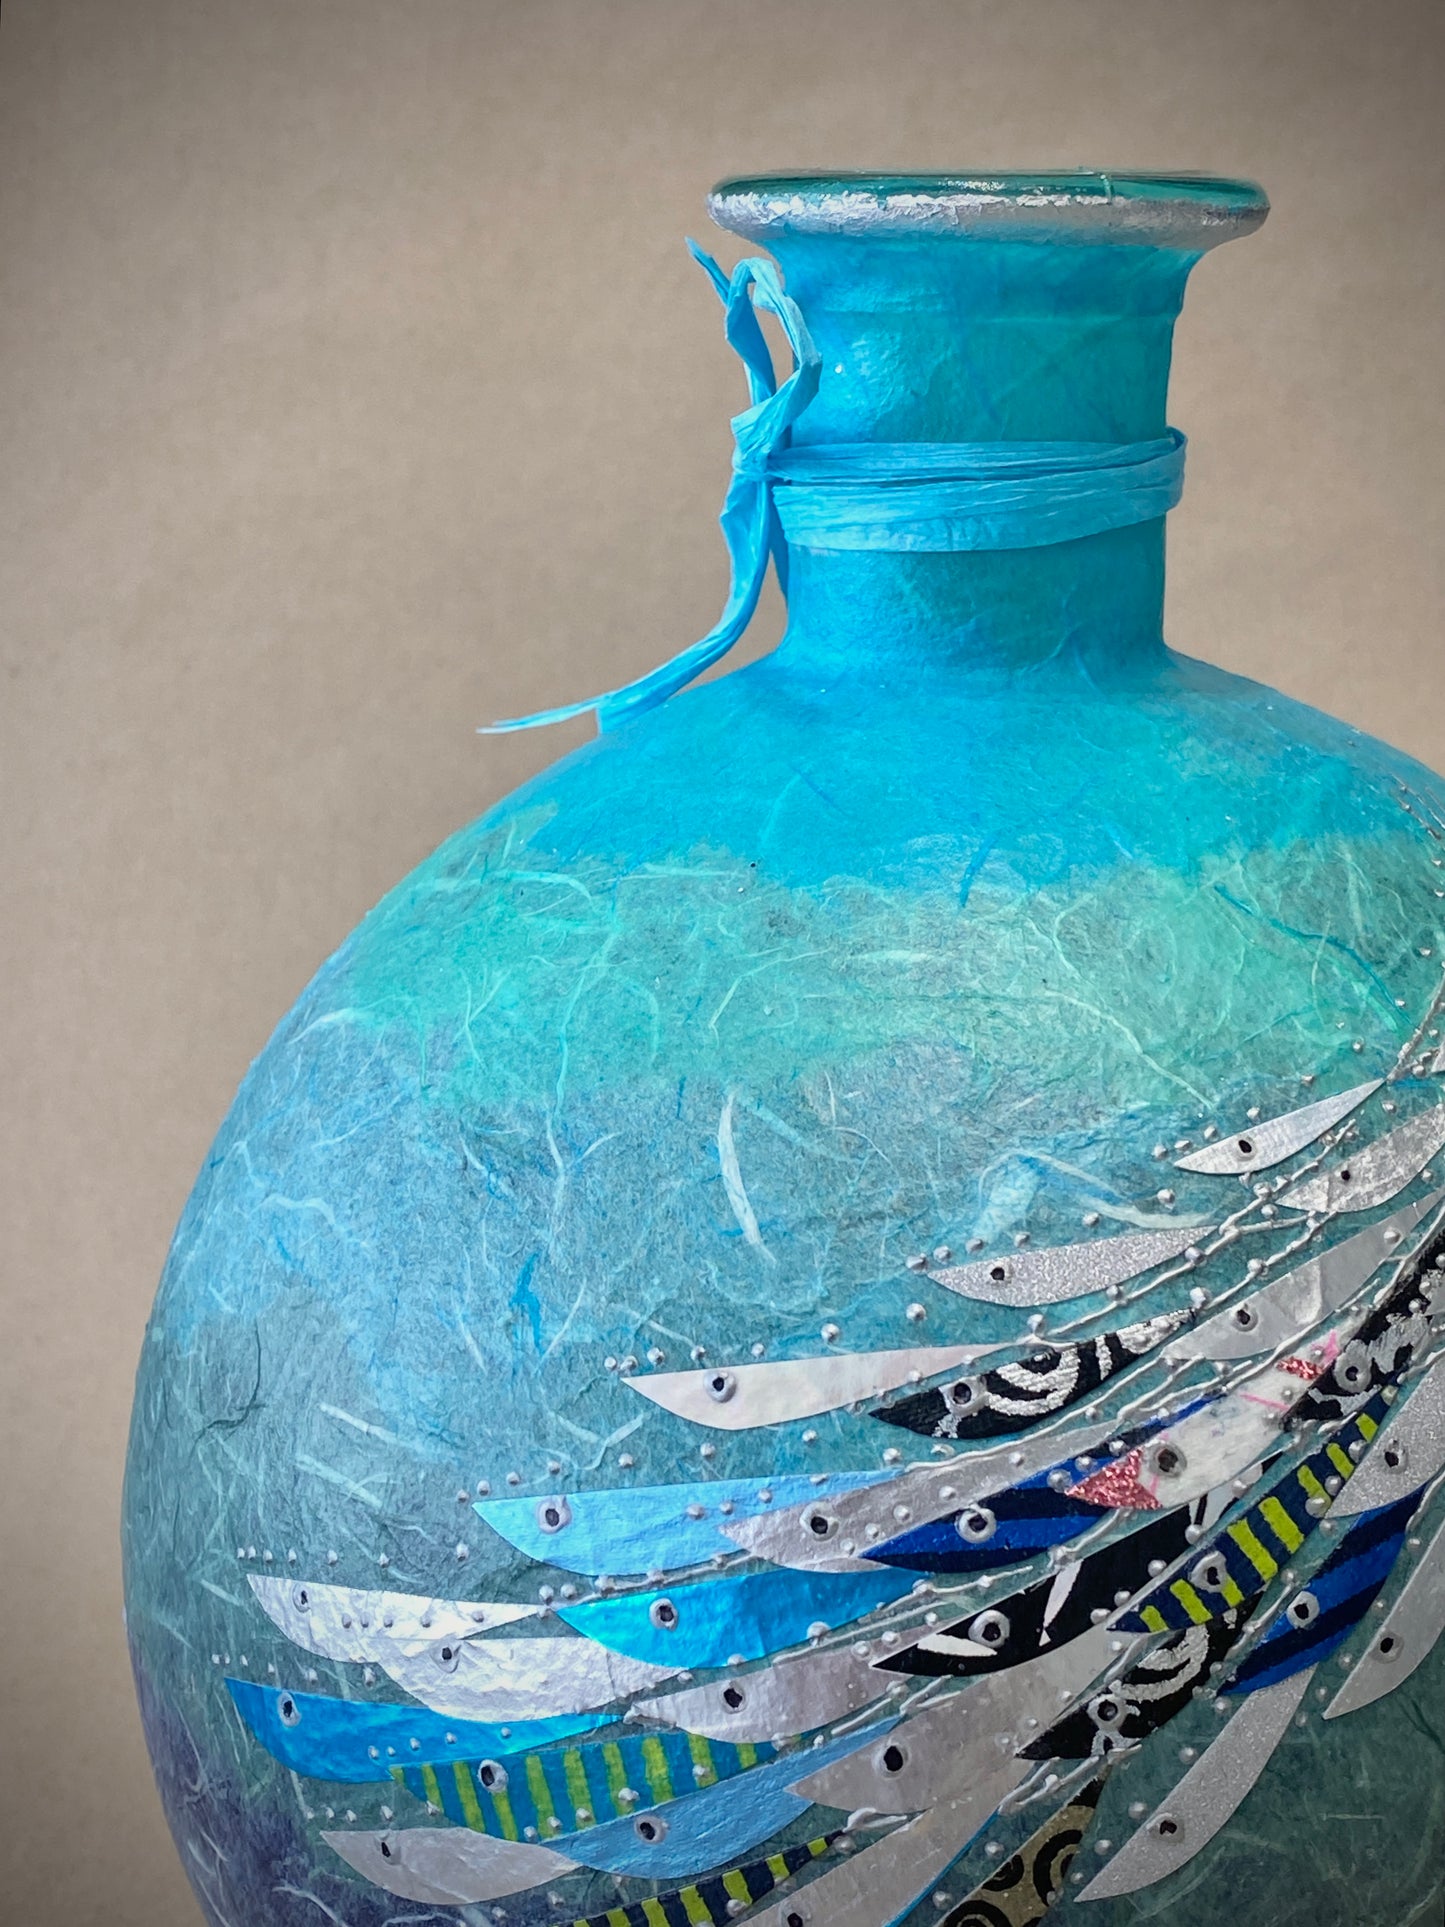 Load image into Gallery viewer, Medium Globe Vase
